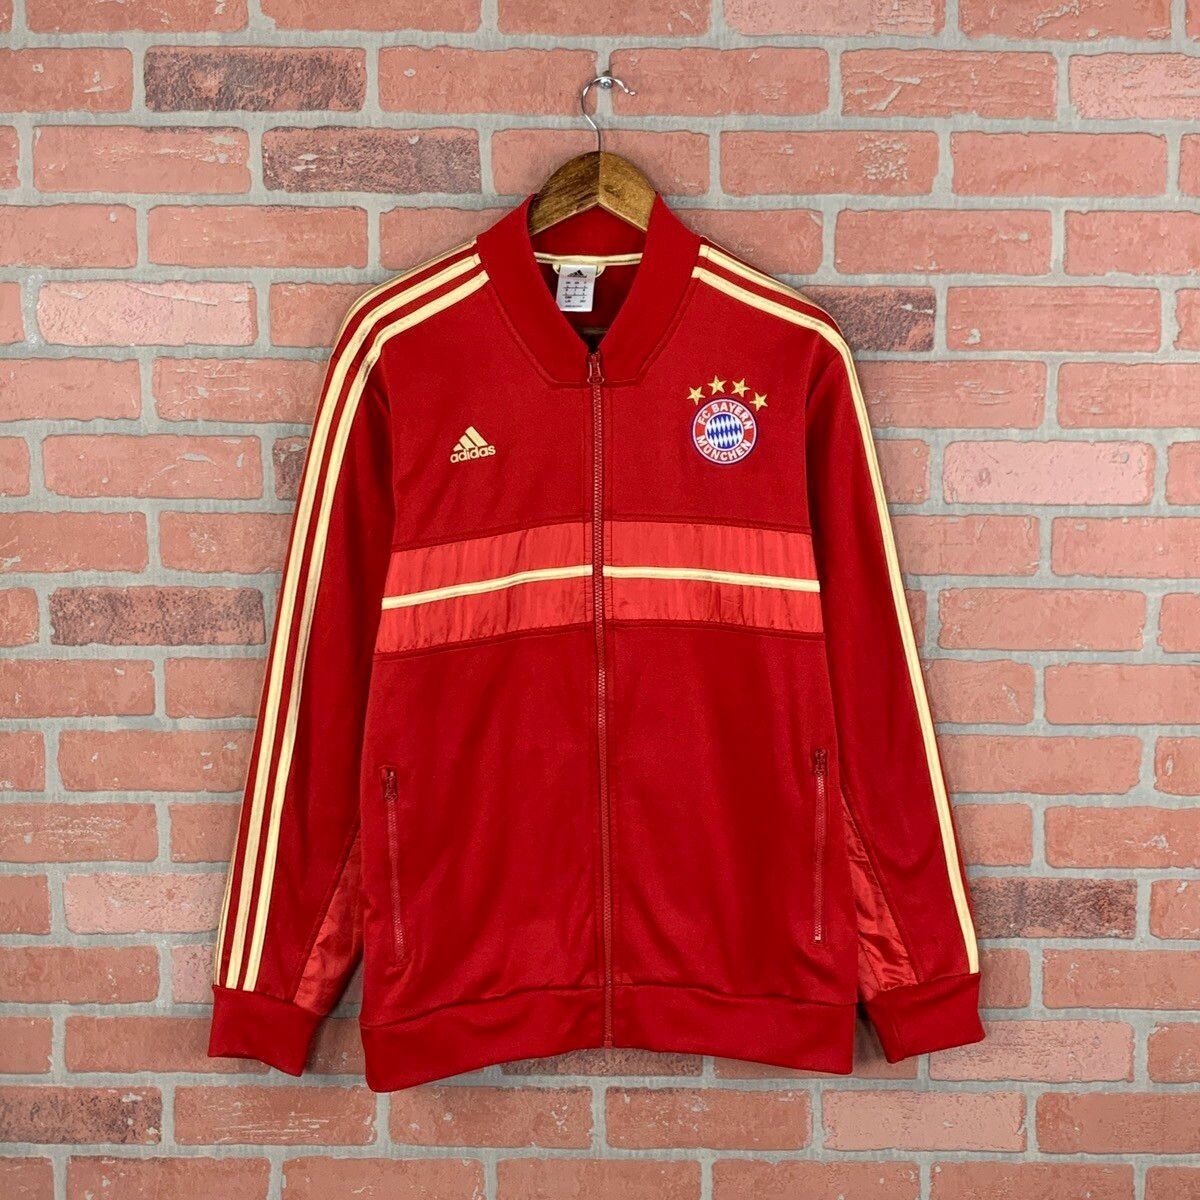 Adidas ADIDAS FC Bayern Munich 2012-13 Anthem Track Jacket Large L Size US L / EU 52-54 / 3 - 1 Preview